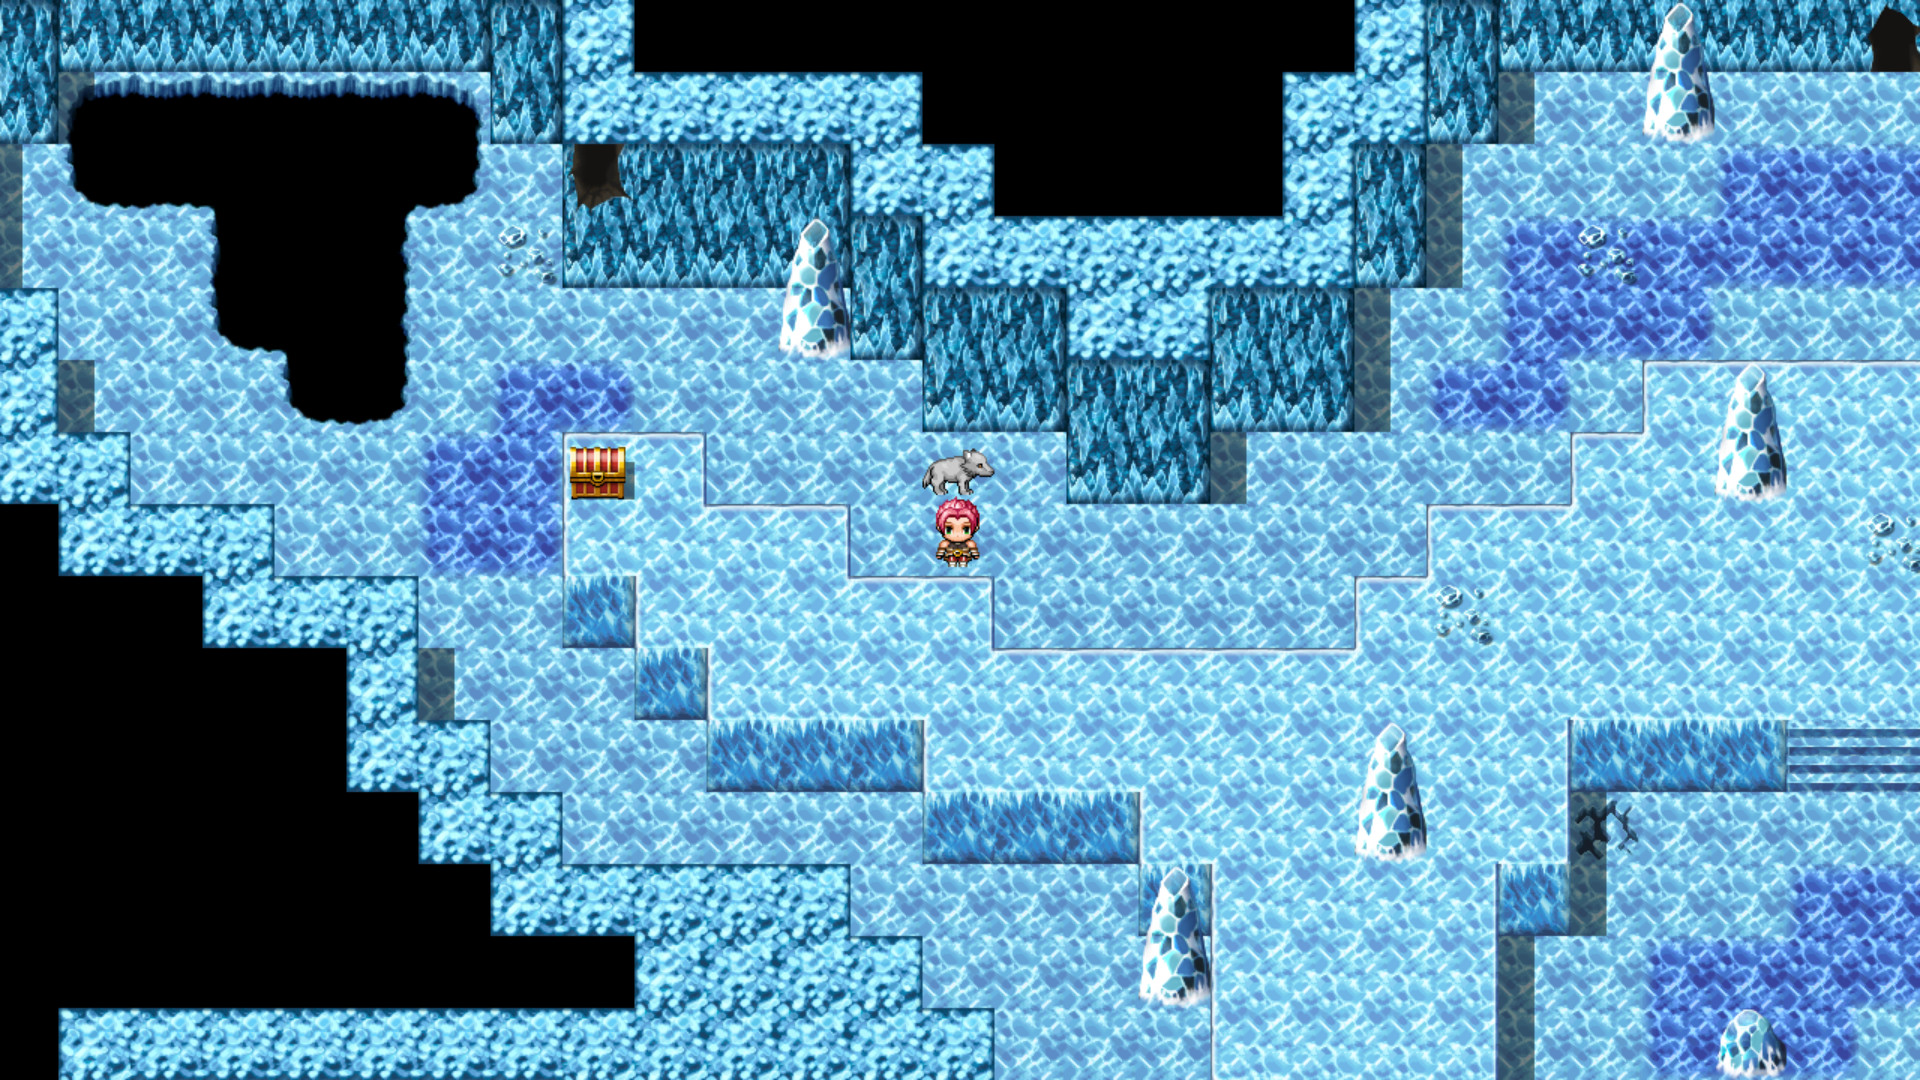 Hikariblade RPG screenshot